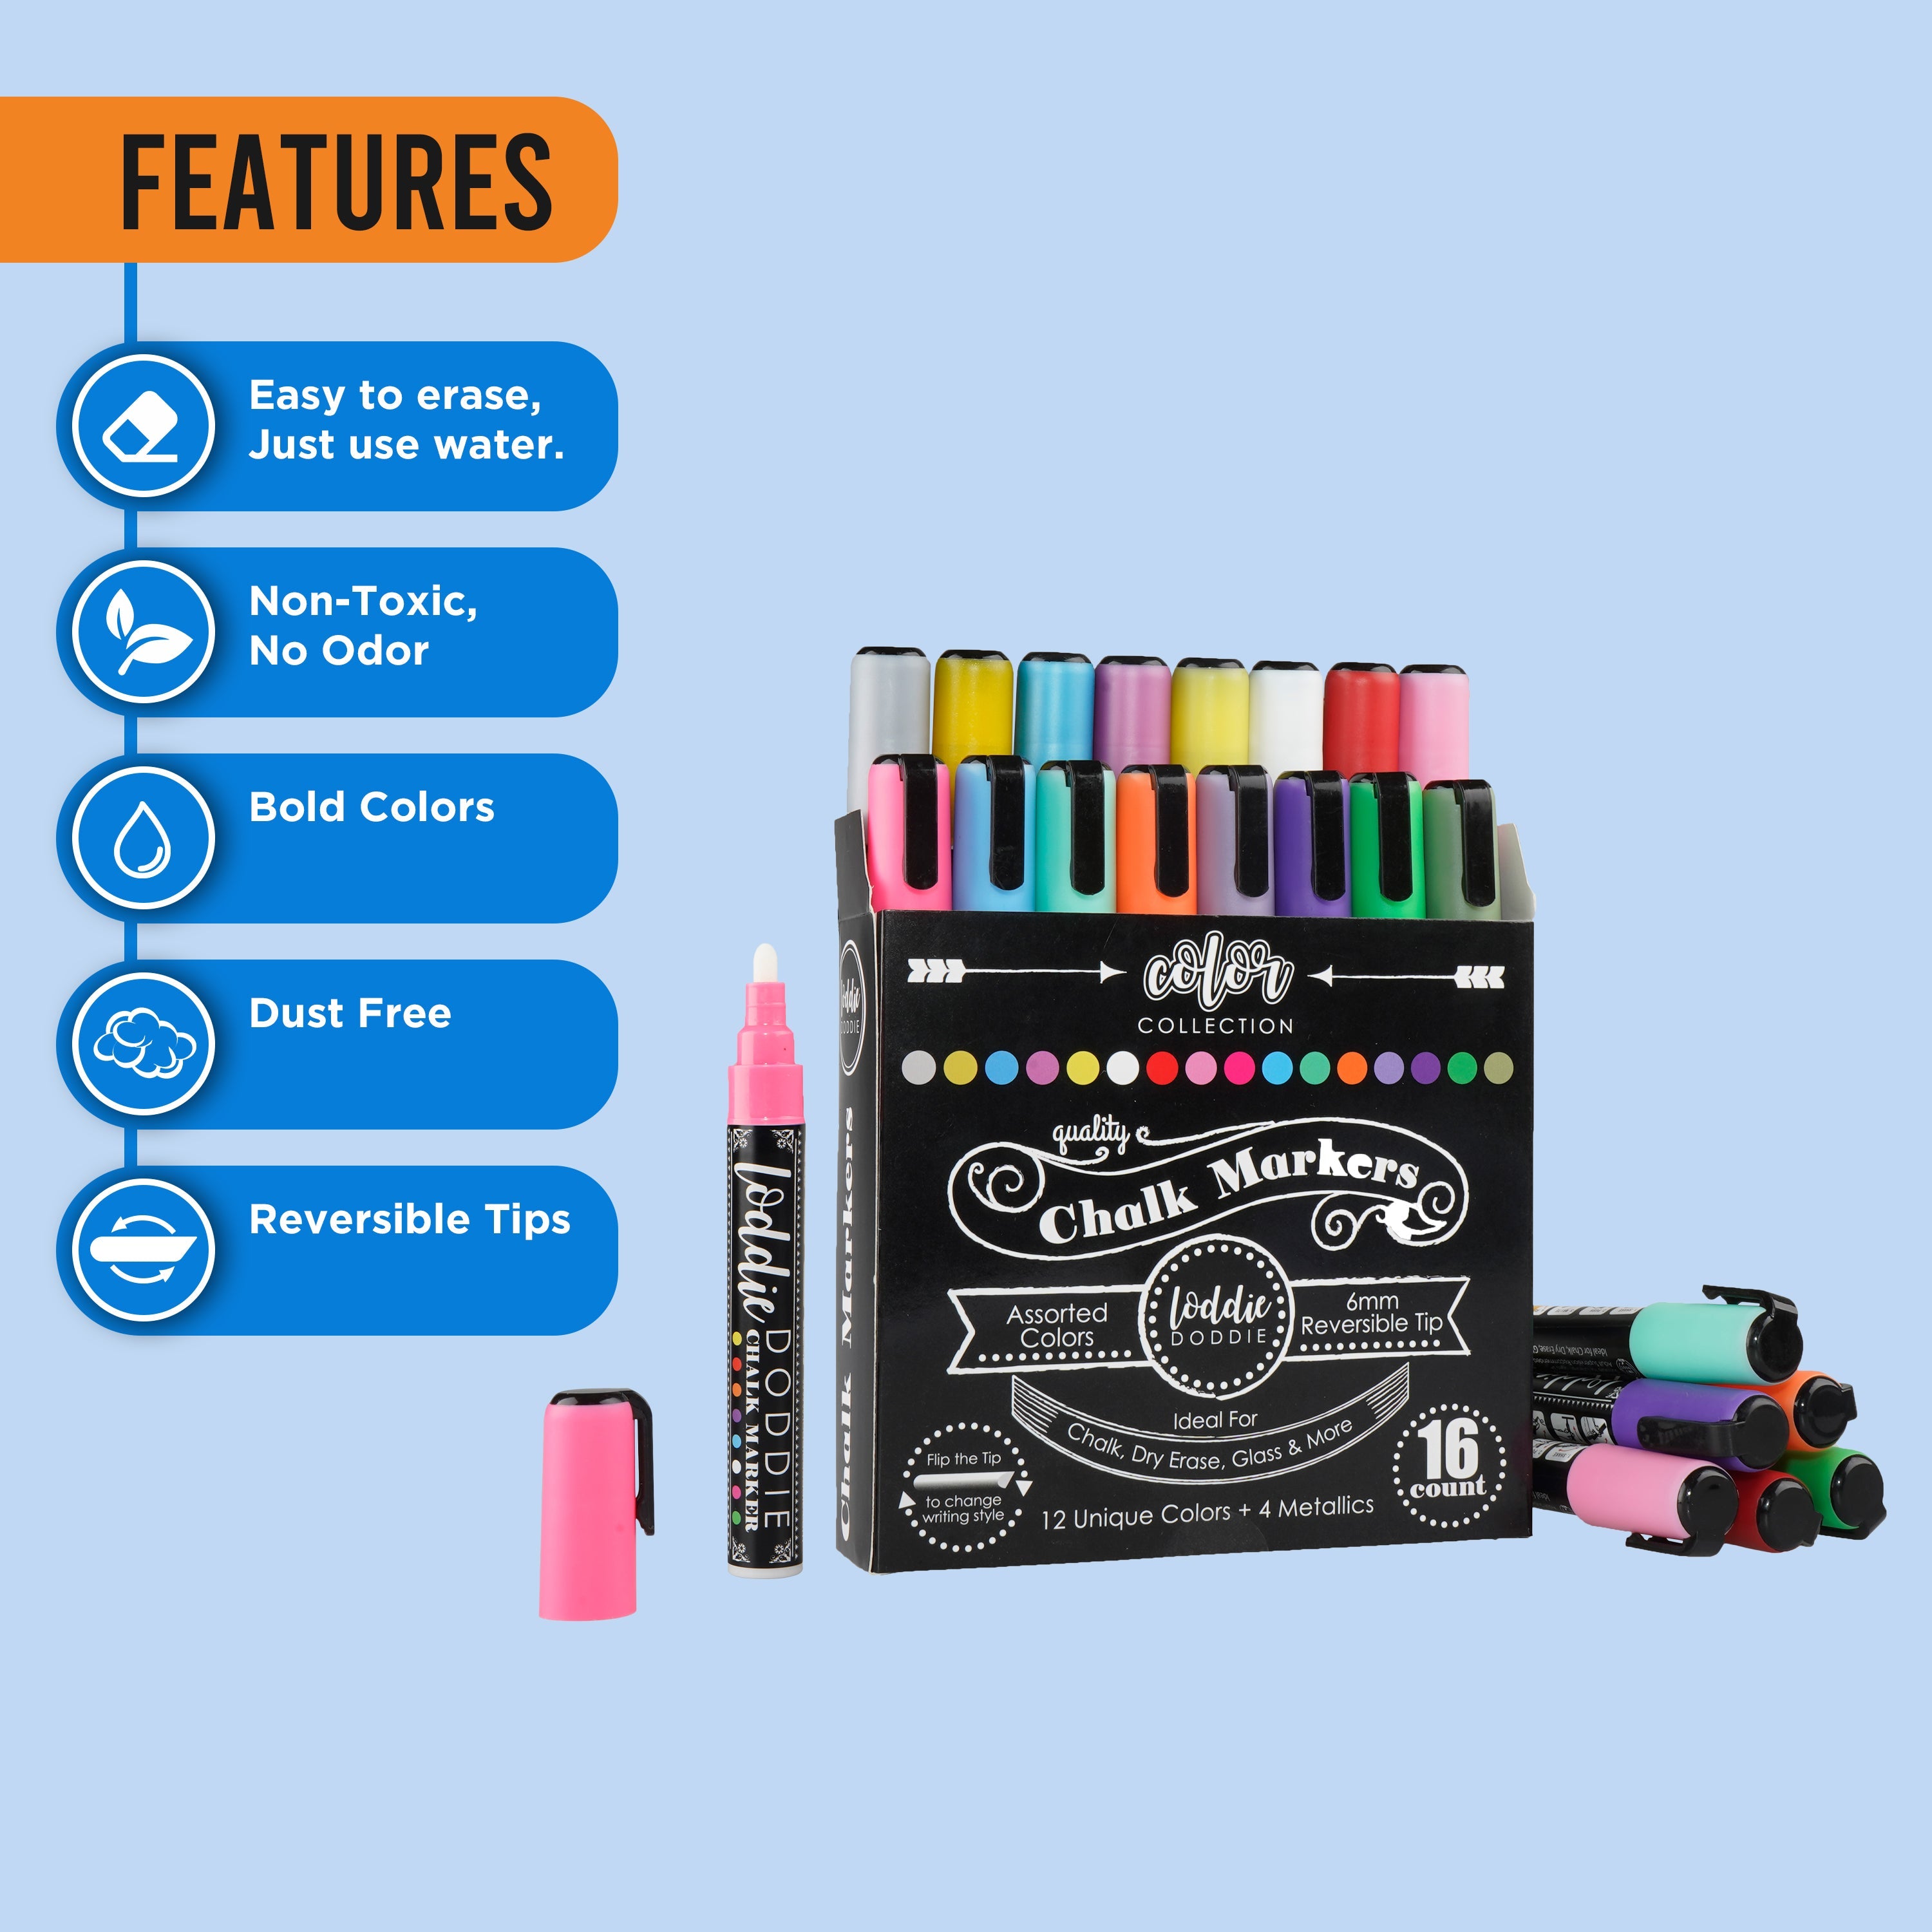 Liquid Chalk Markers for Blackboards - Bold Color Dry Erase Marker